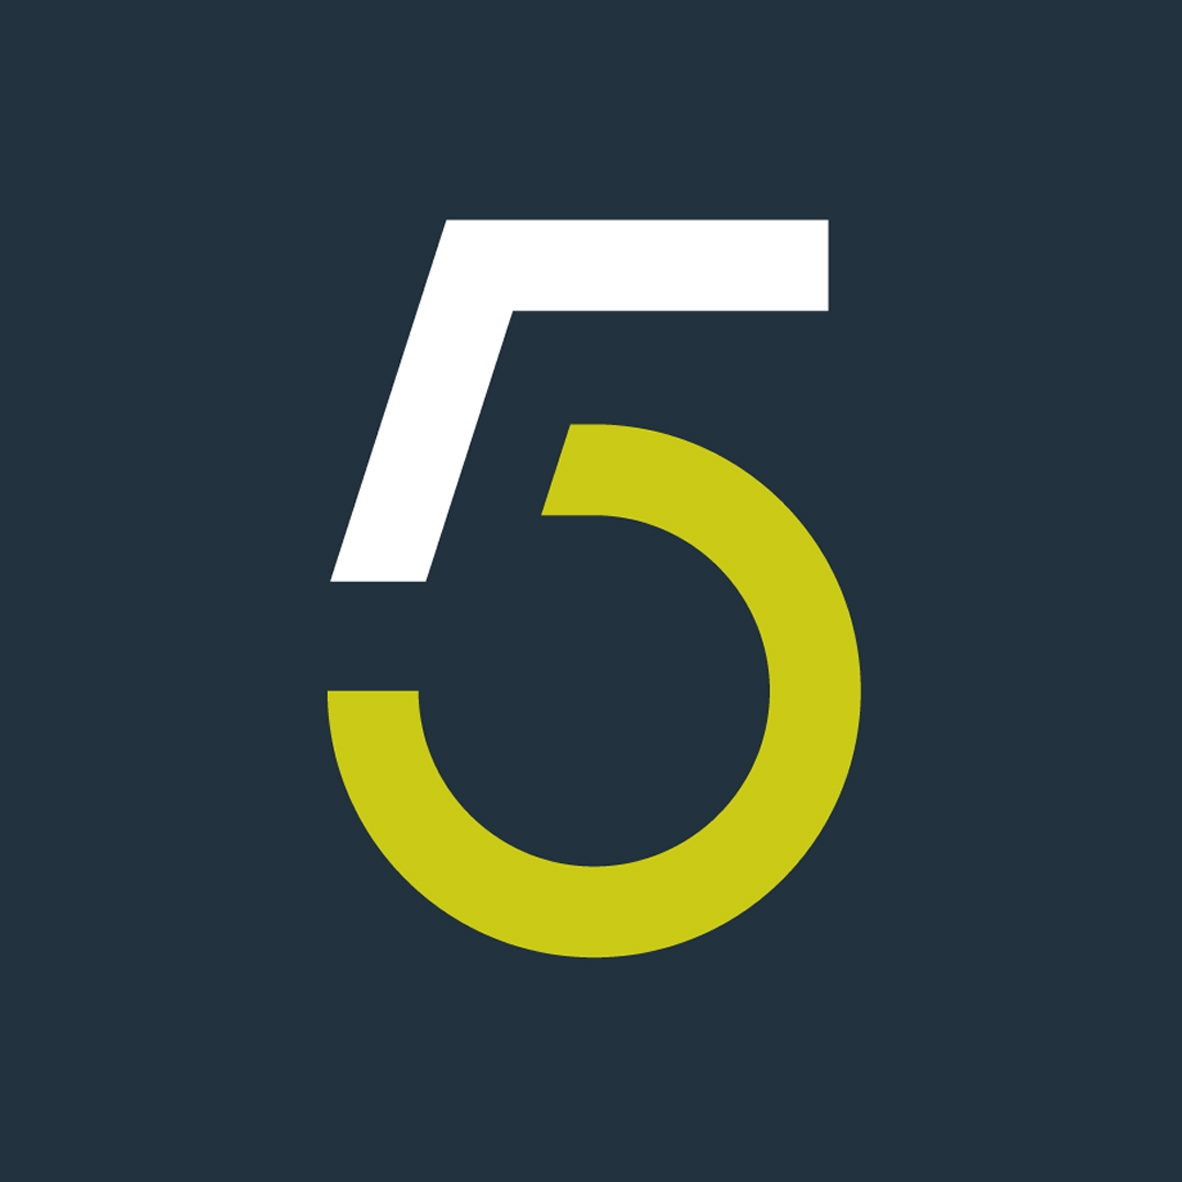 5 by 5 logo